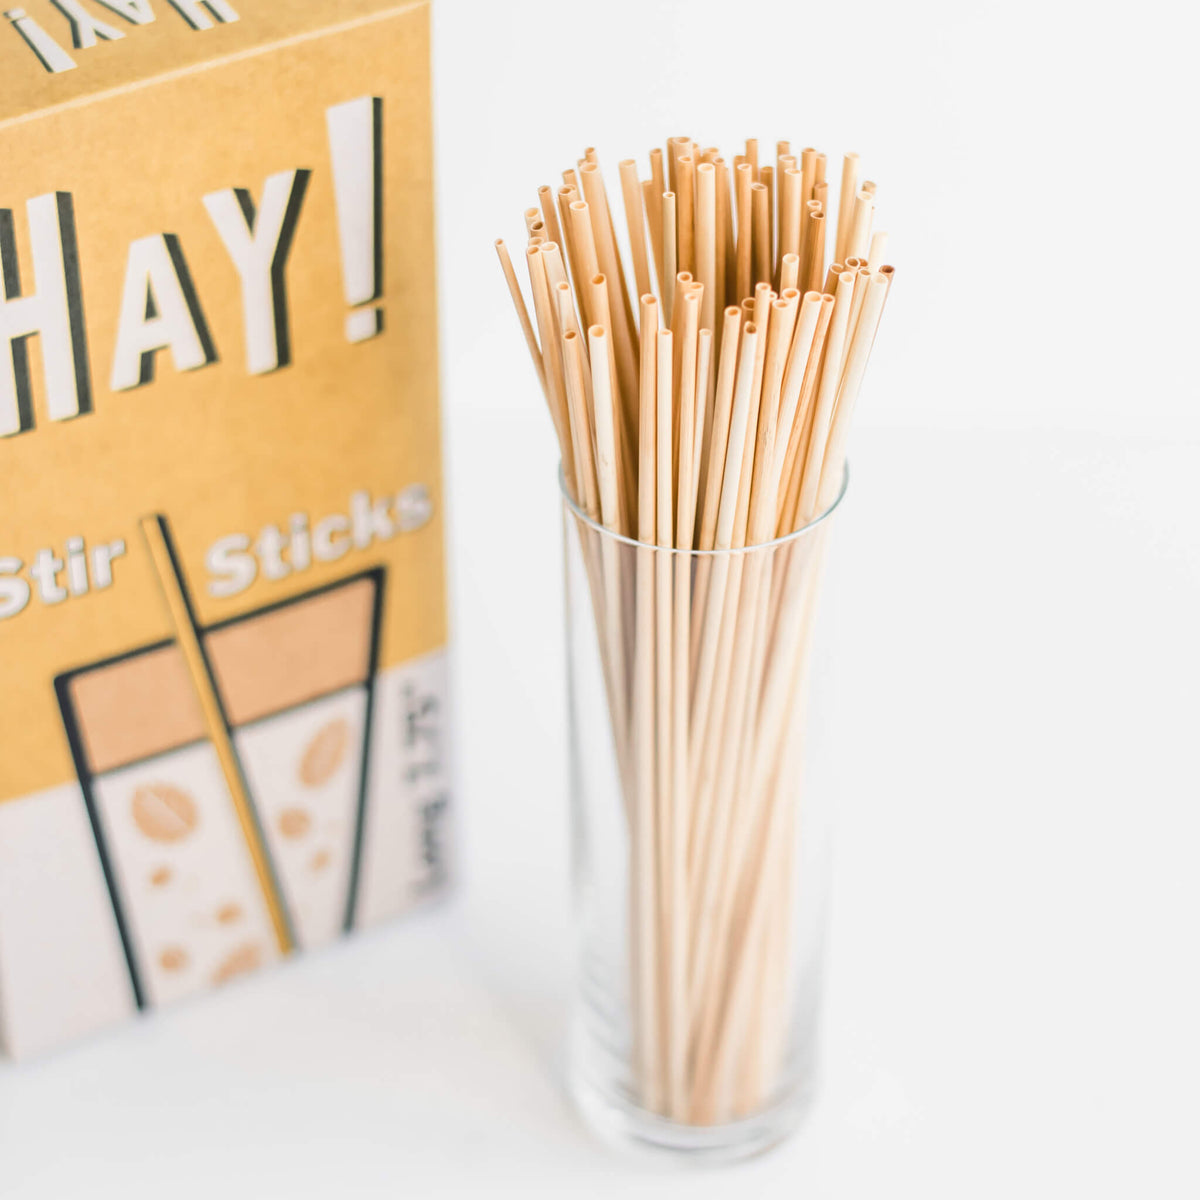 HAY! Stir Sticks | 100% Compostable Stir Sticks made from Wheat stems.